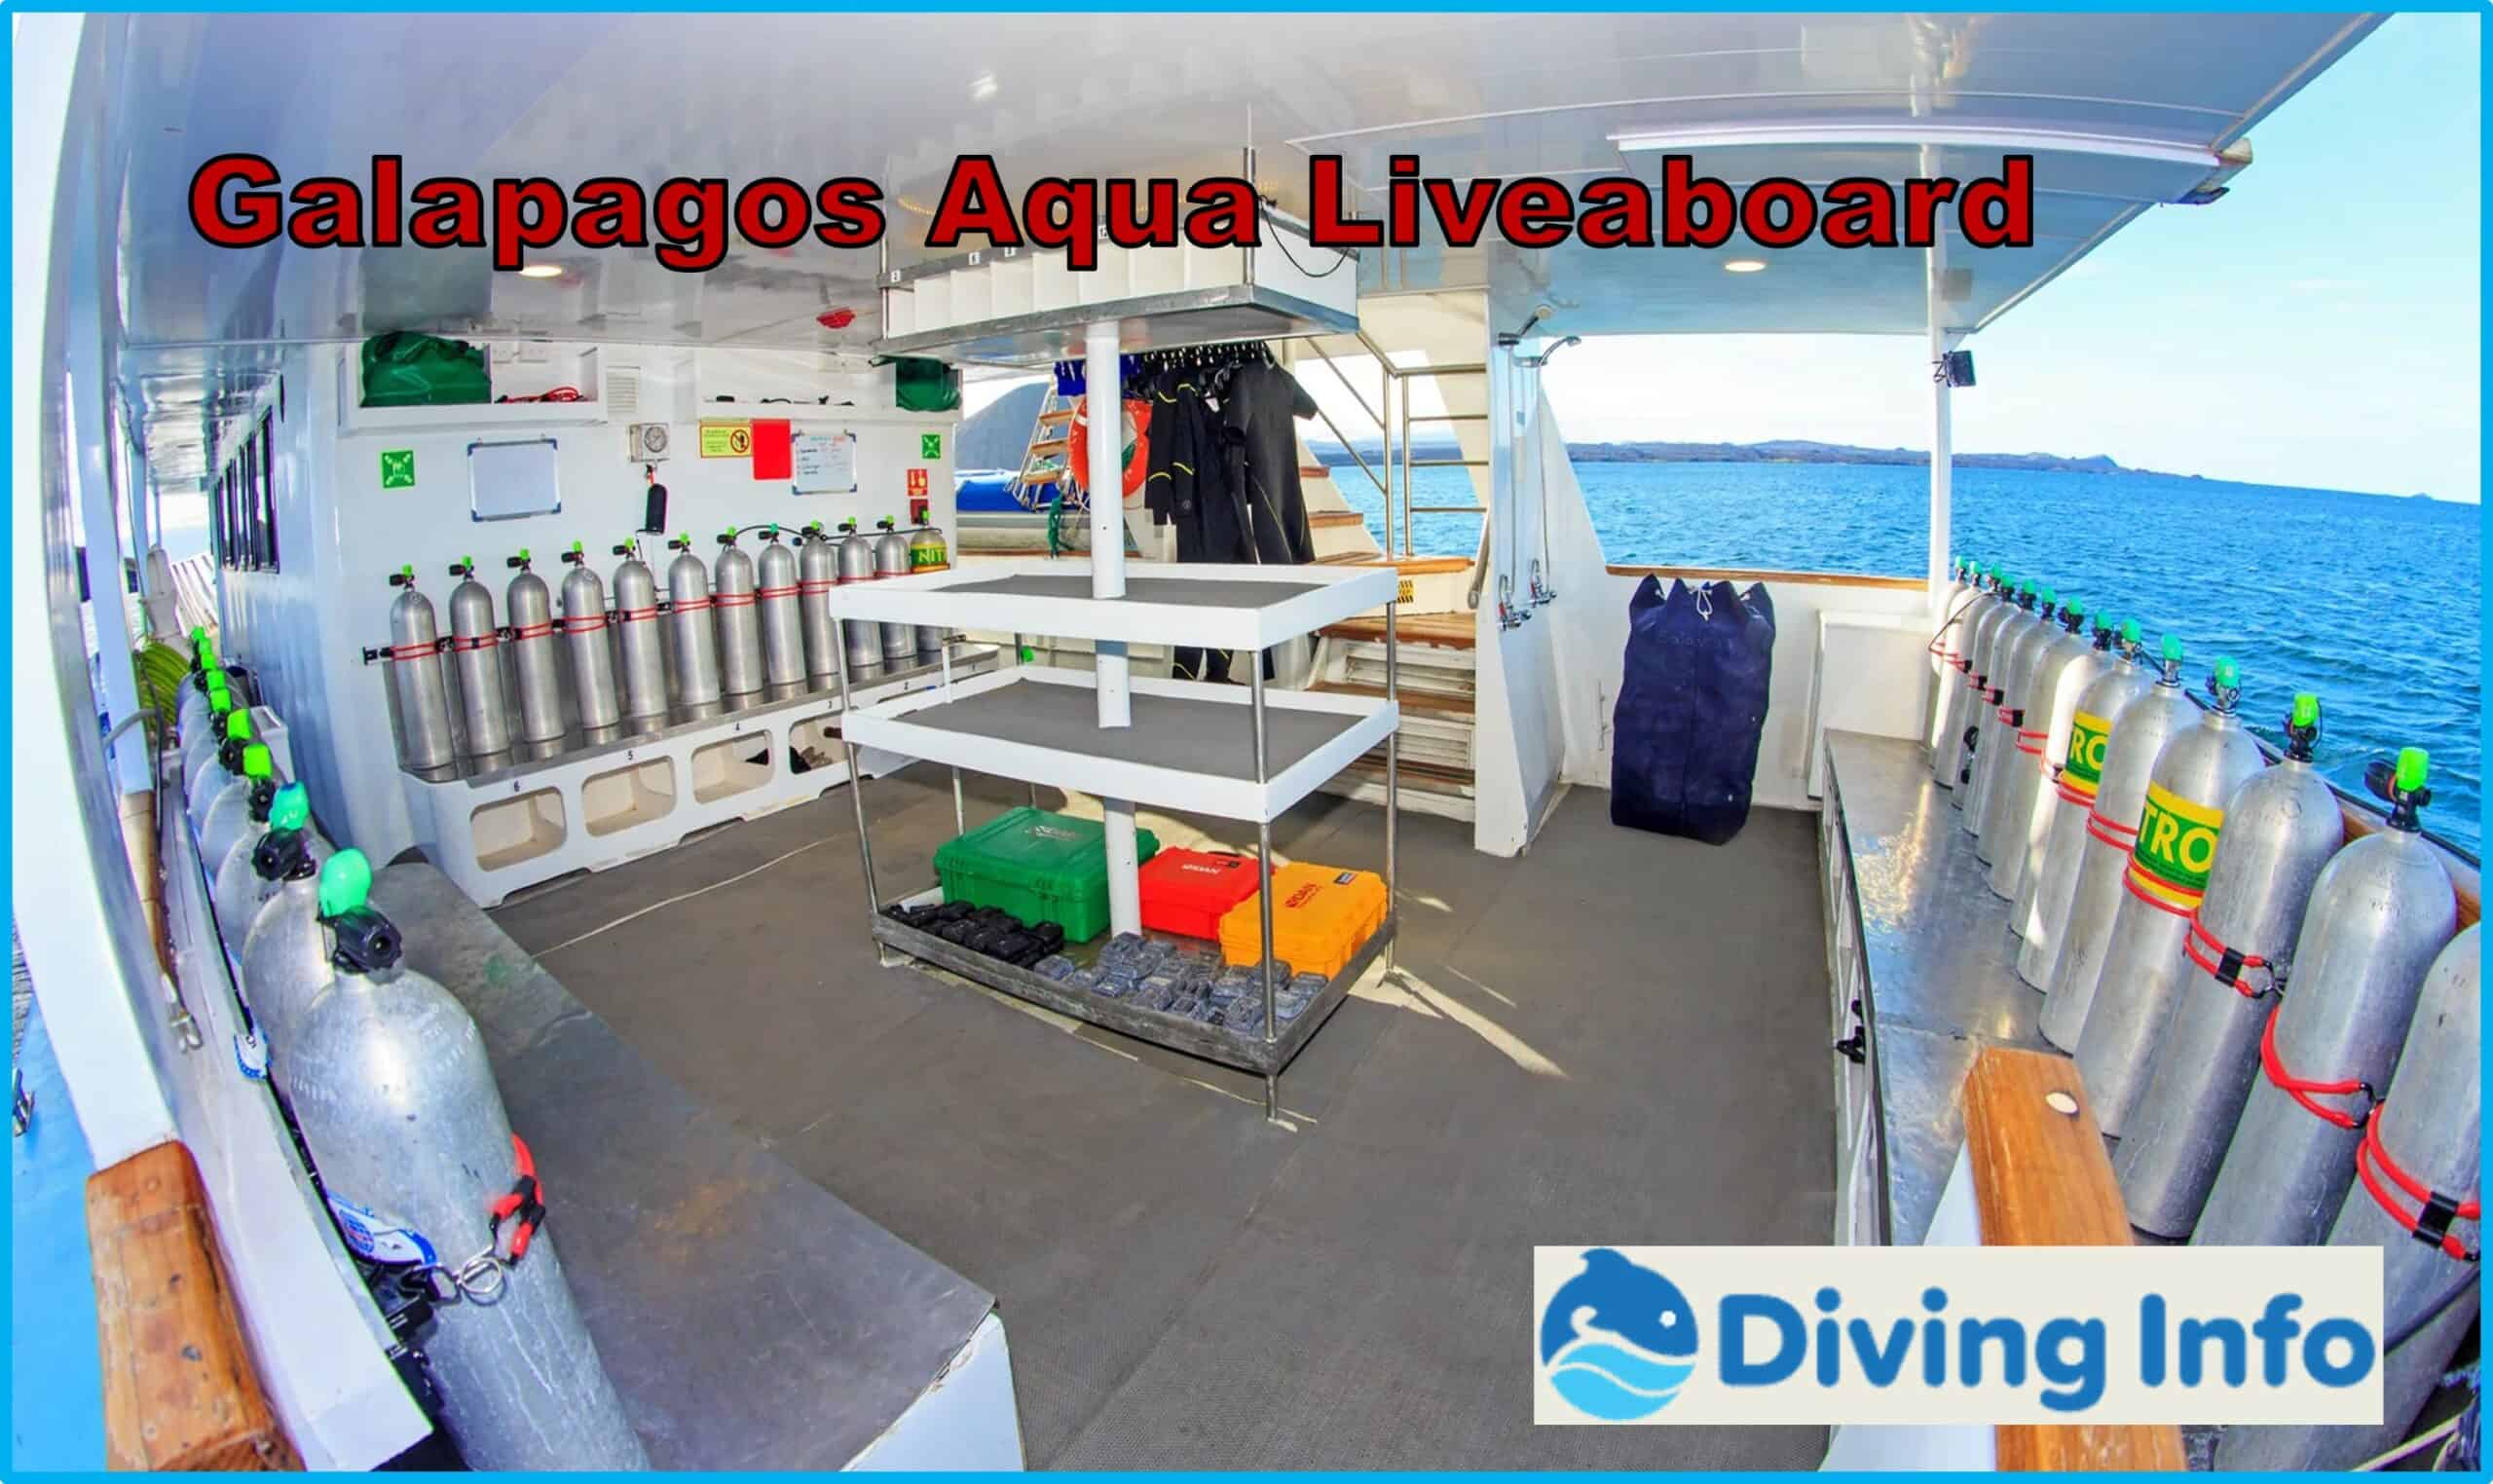 Galapagos Aqua Liveaboard